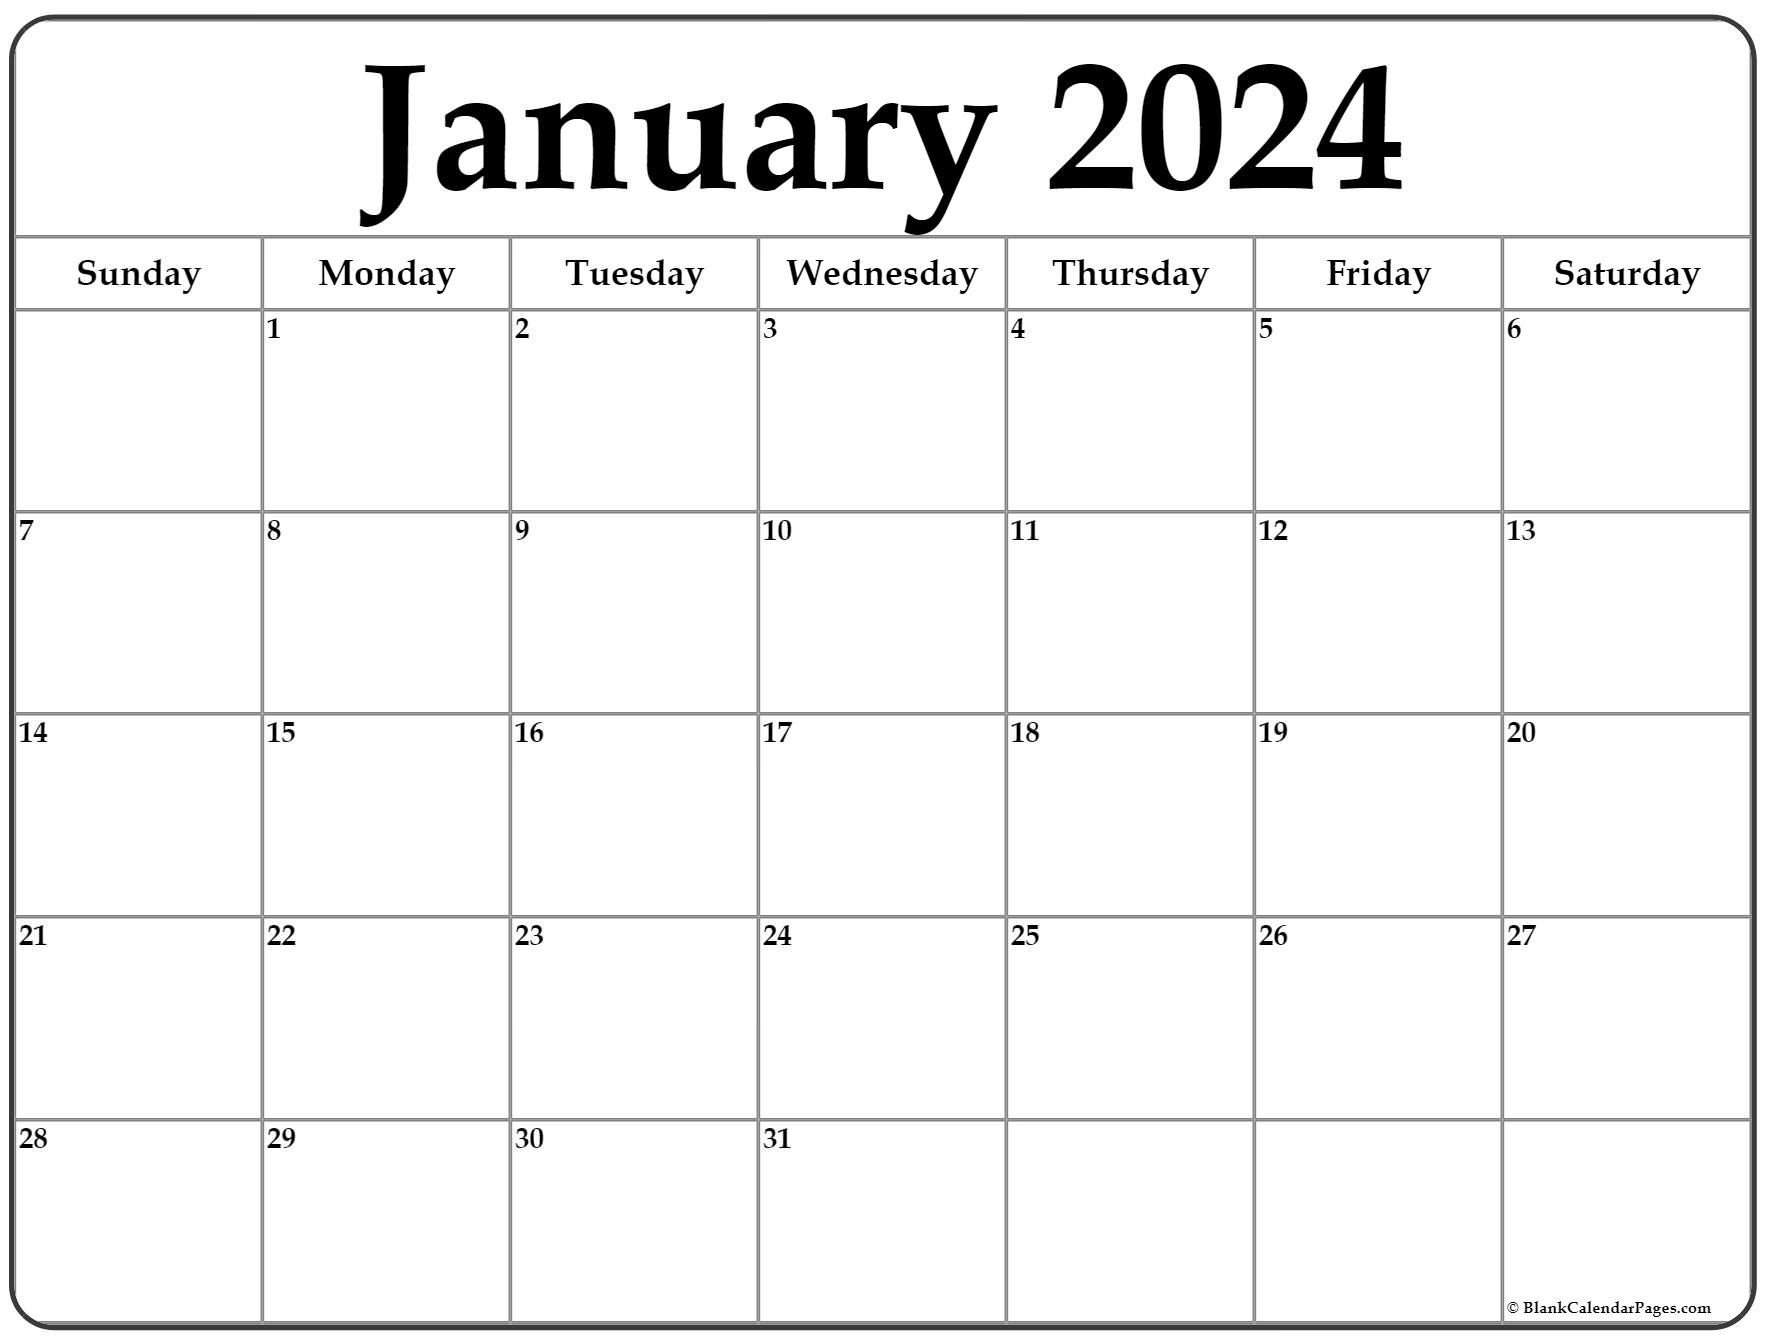 Free Printable Calendar Templates 2022 January 2022 Calendar | Free Printable Calendar Templates